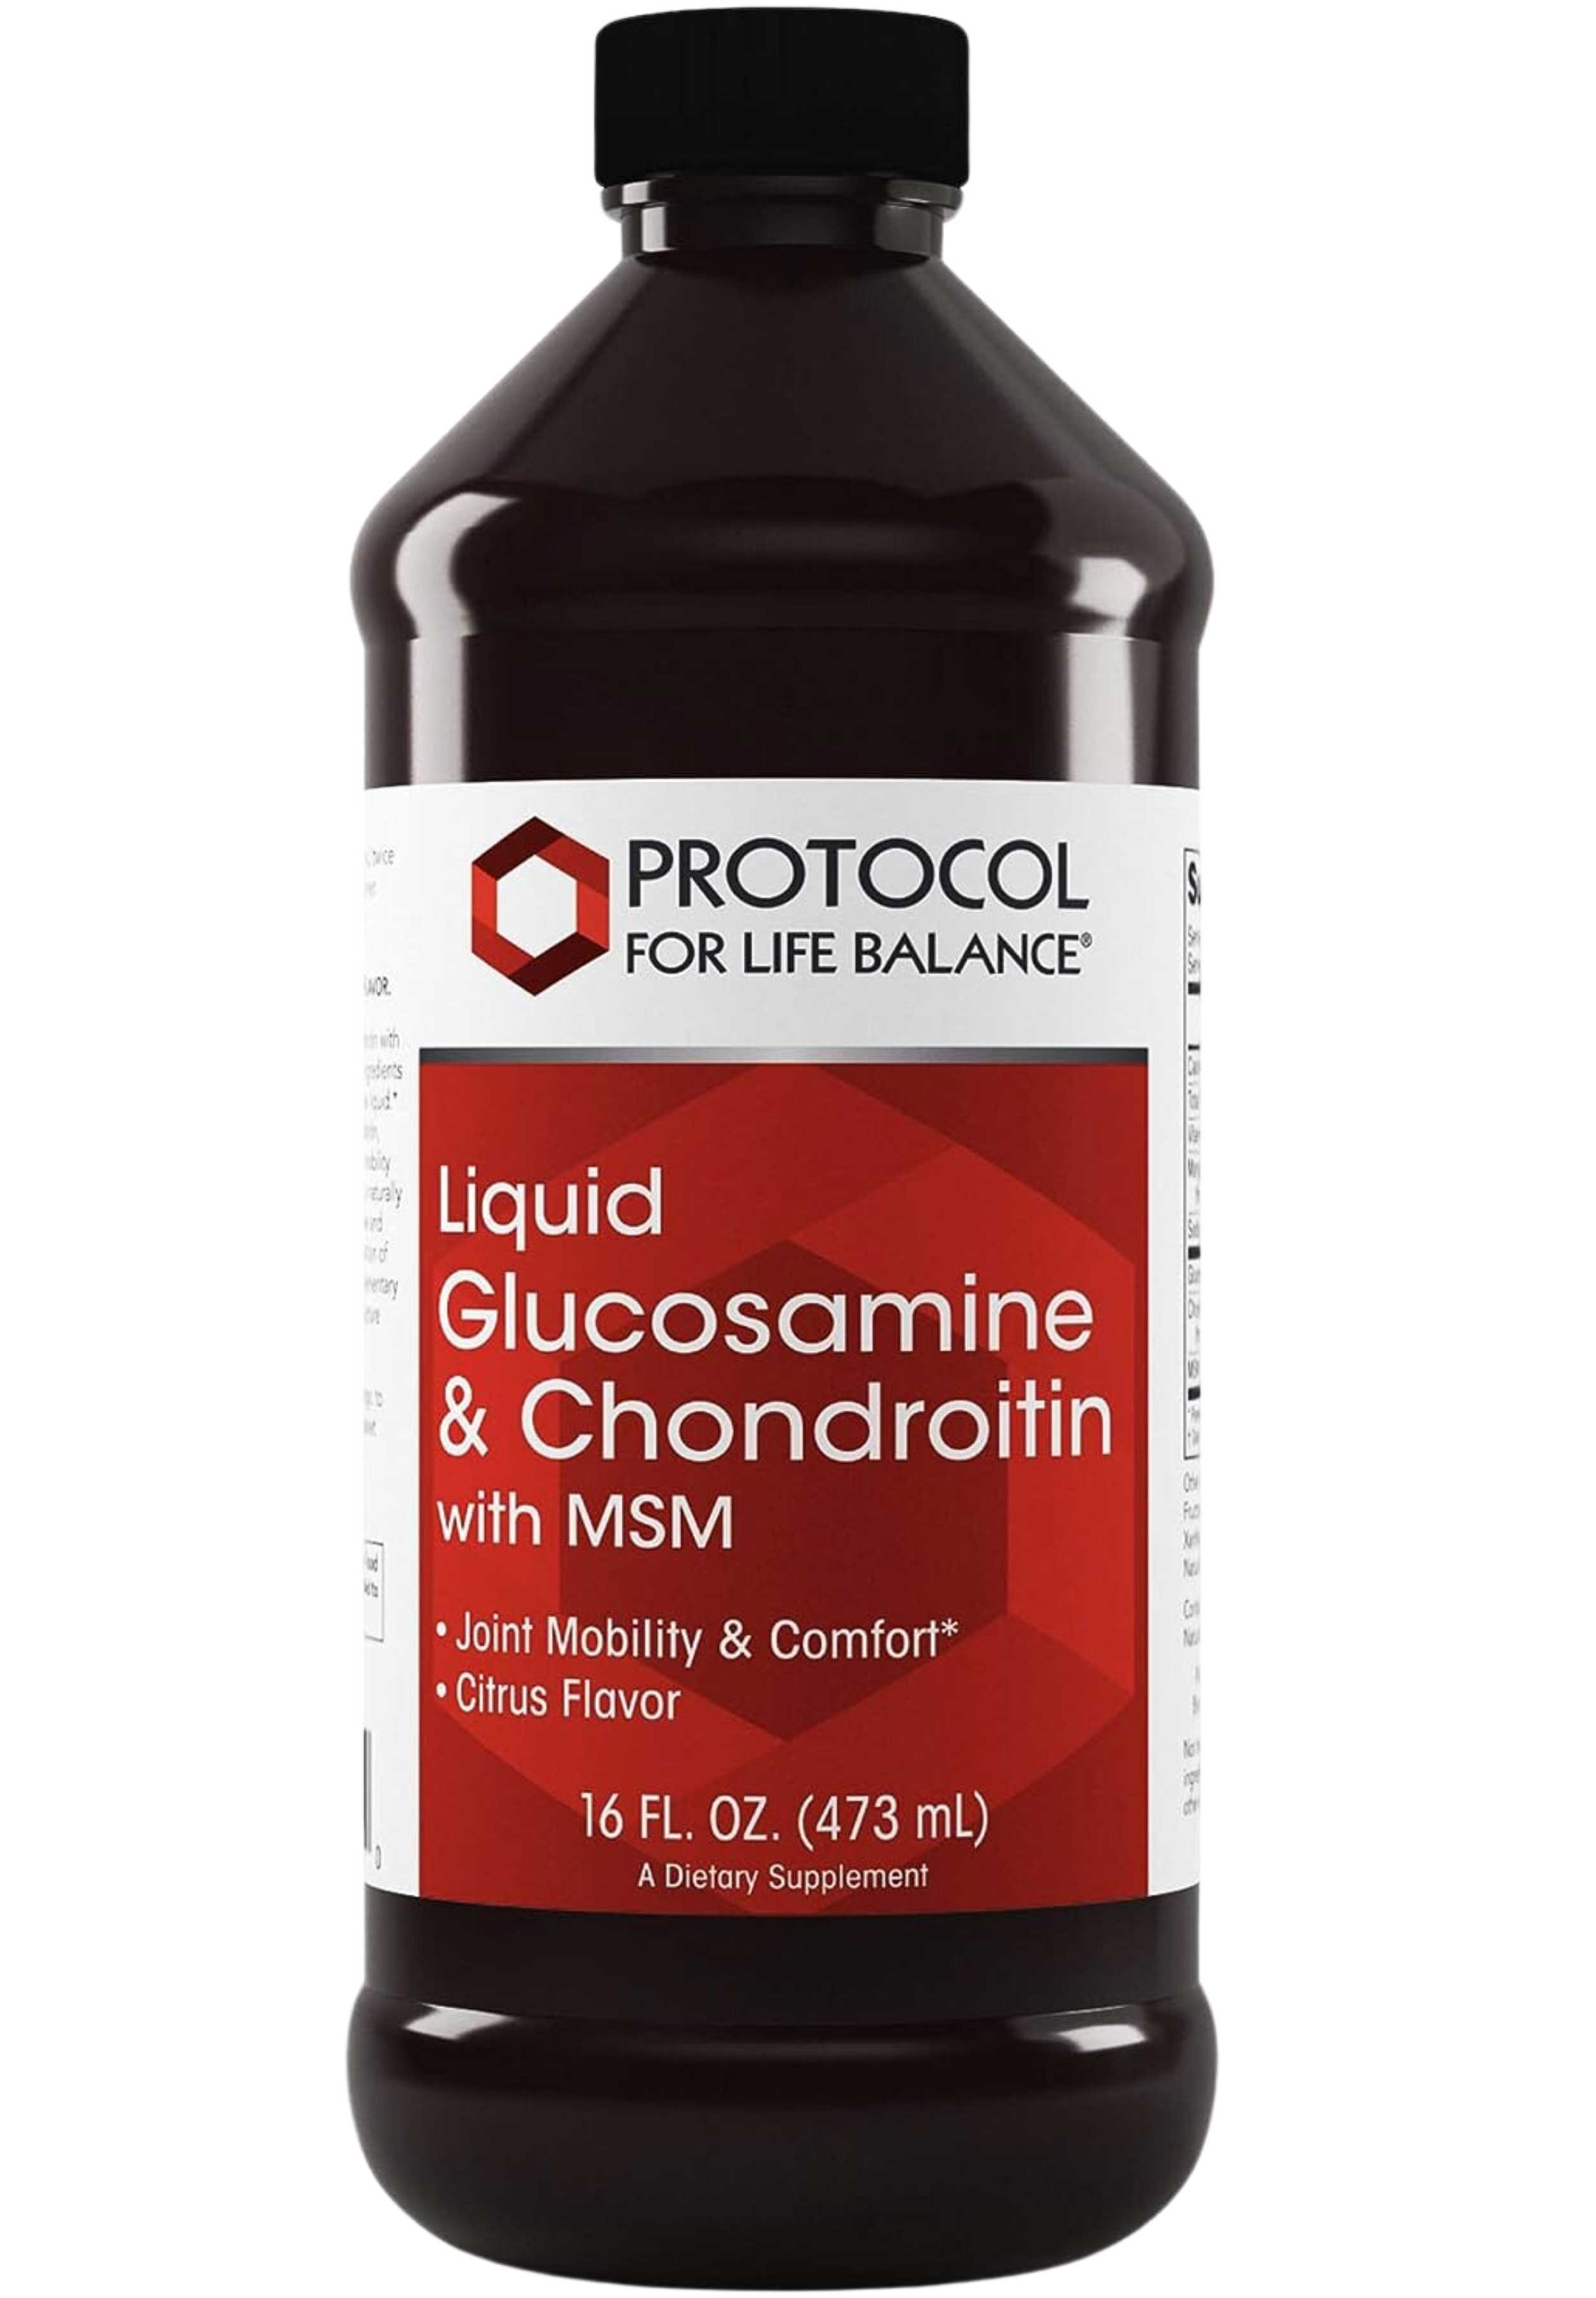 Protocol for Life Balance Liquid Glucosamine & Chondroitin with MSM